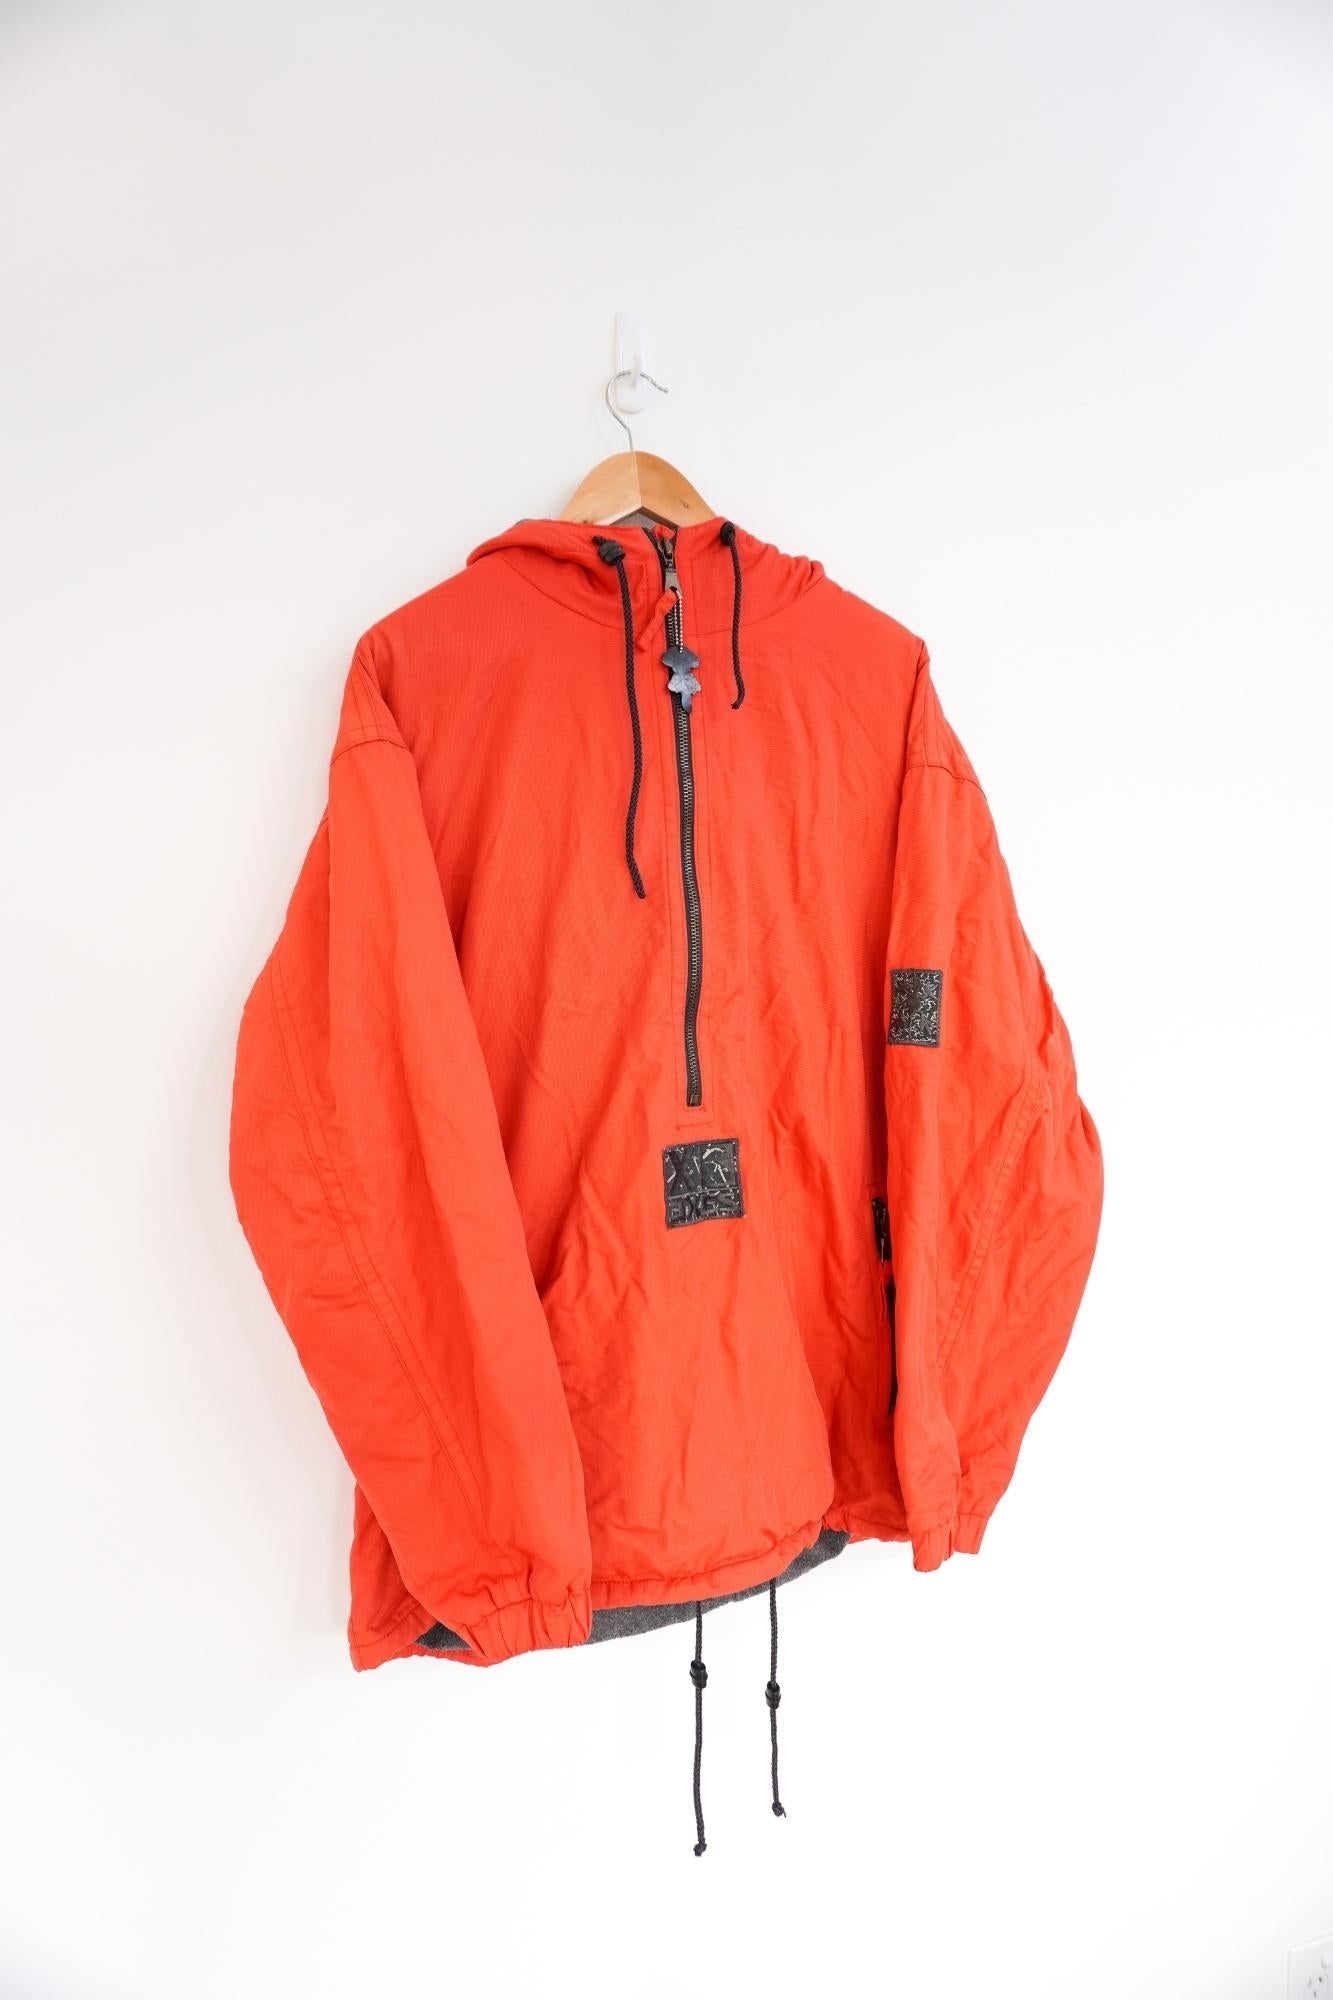 Exes Red Vintage Ski Jacket